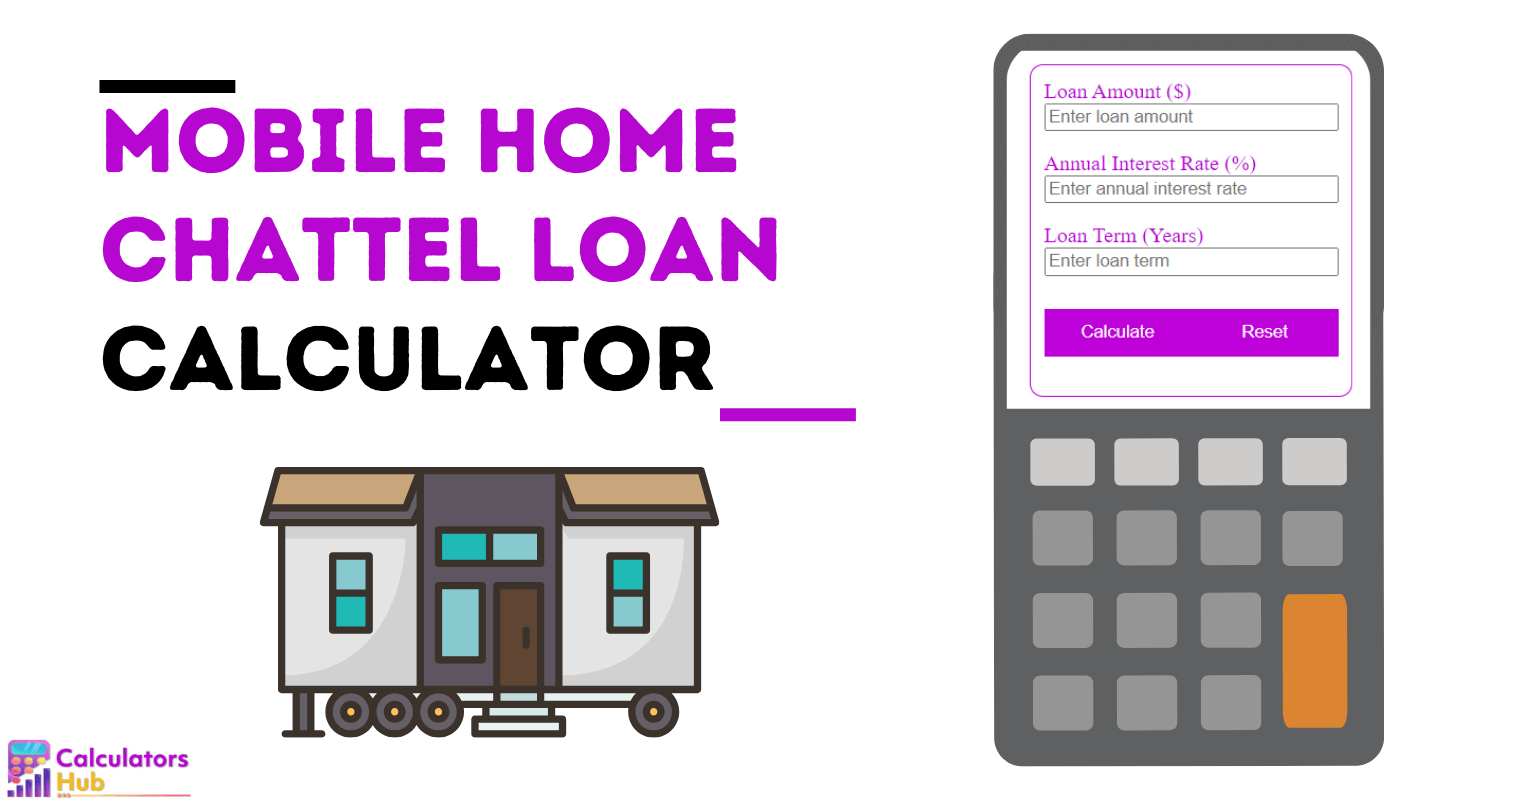 Mobile Home Chattel Loan Calculator